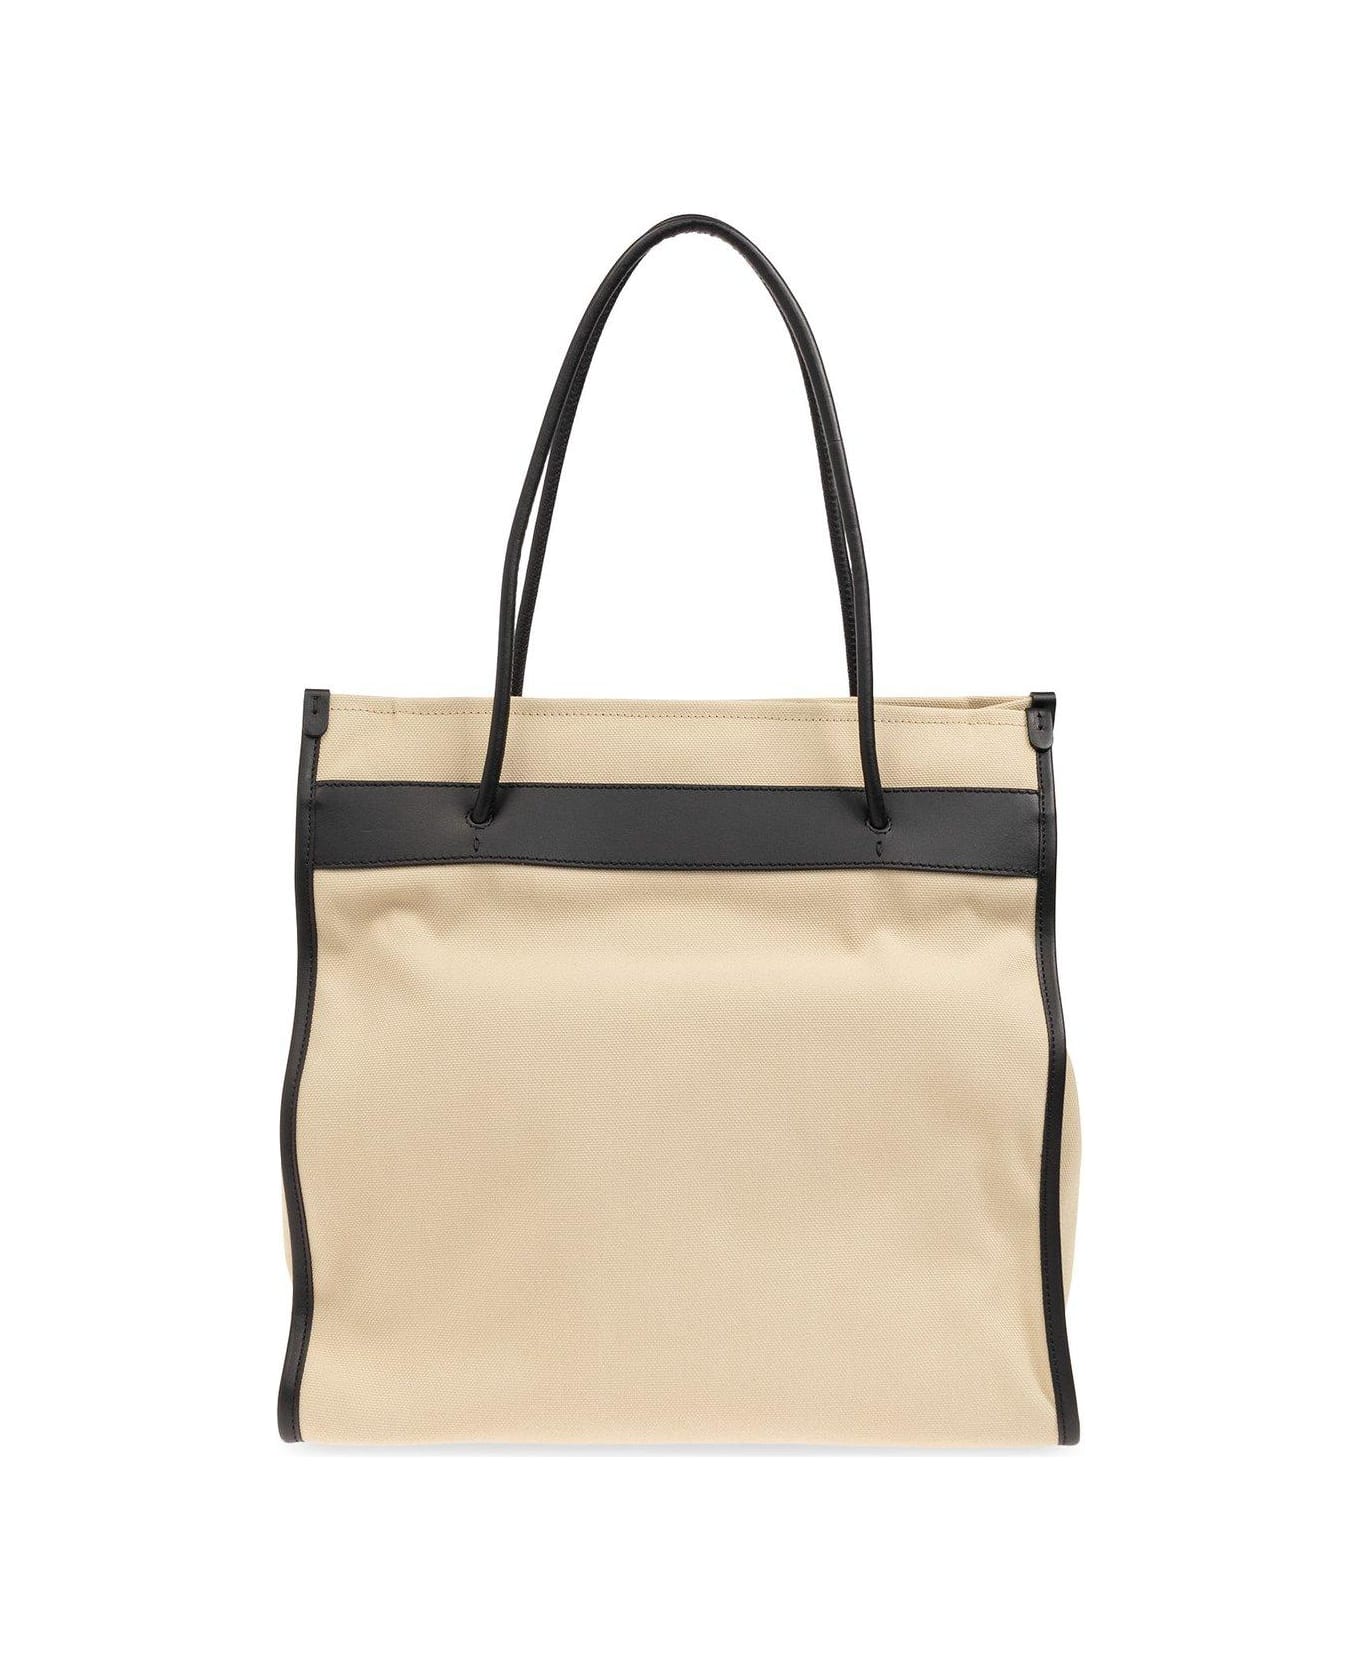 Moschino Open-top Shopper Bag - BEIGE